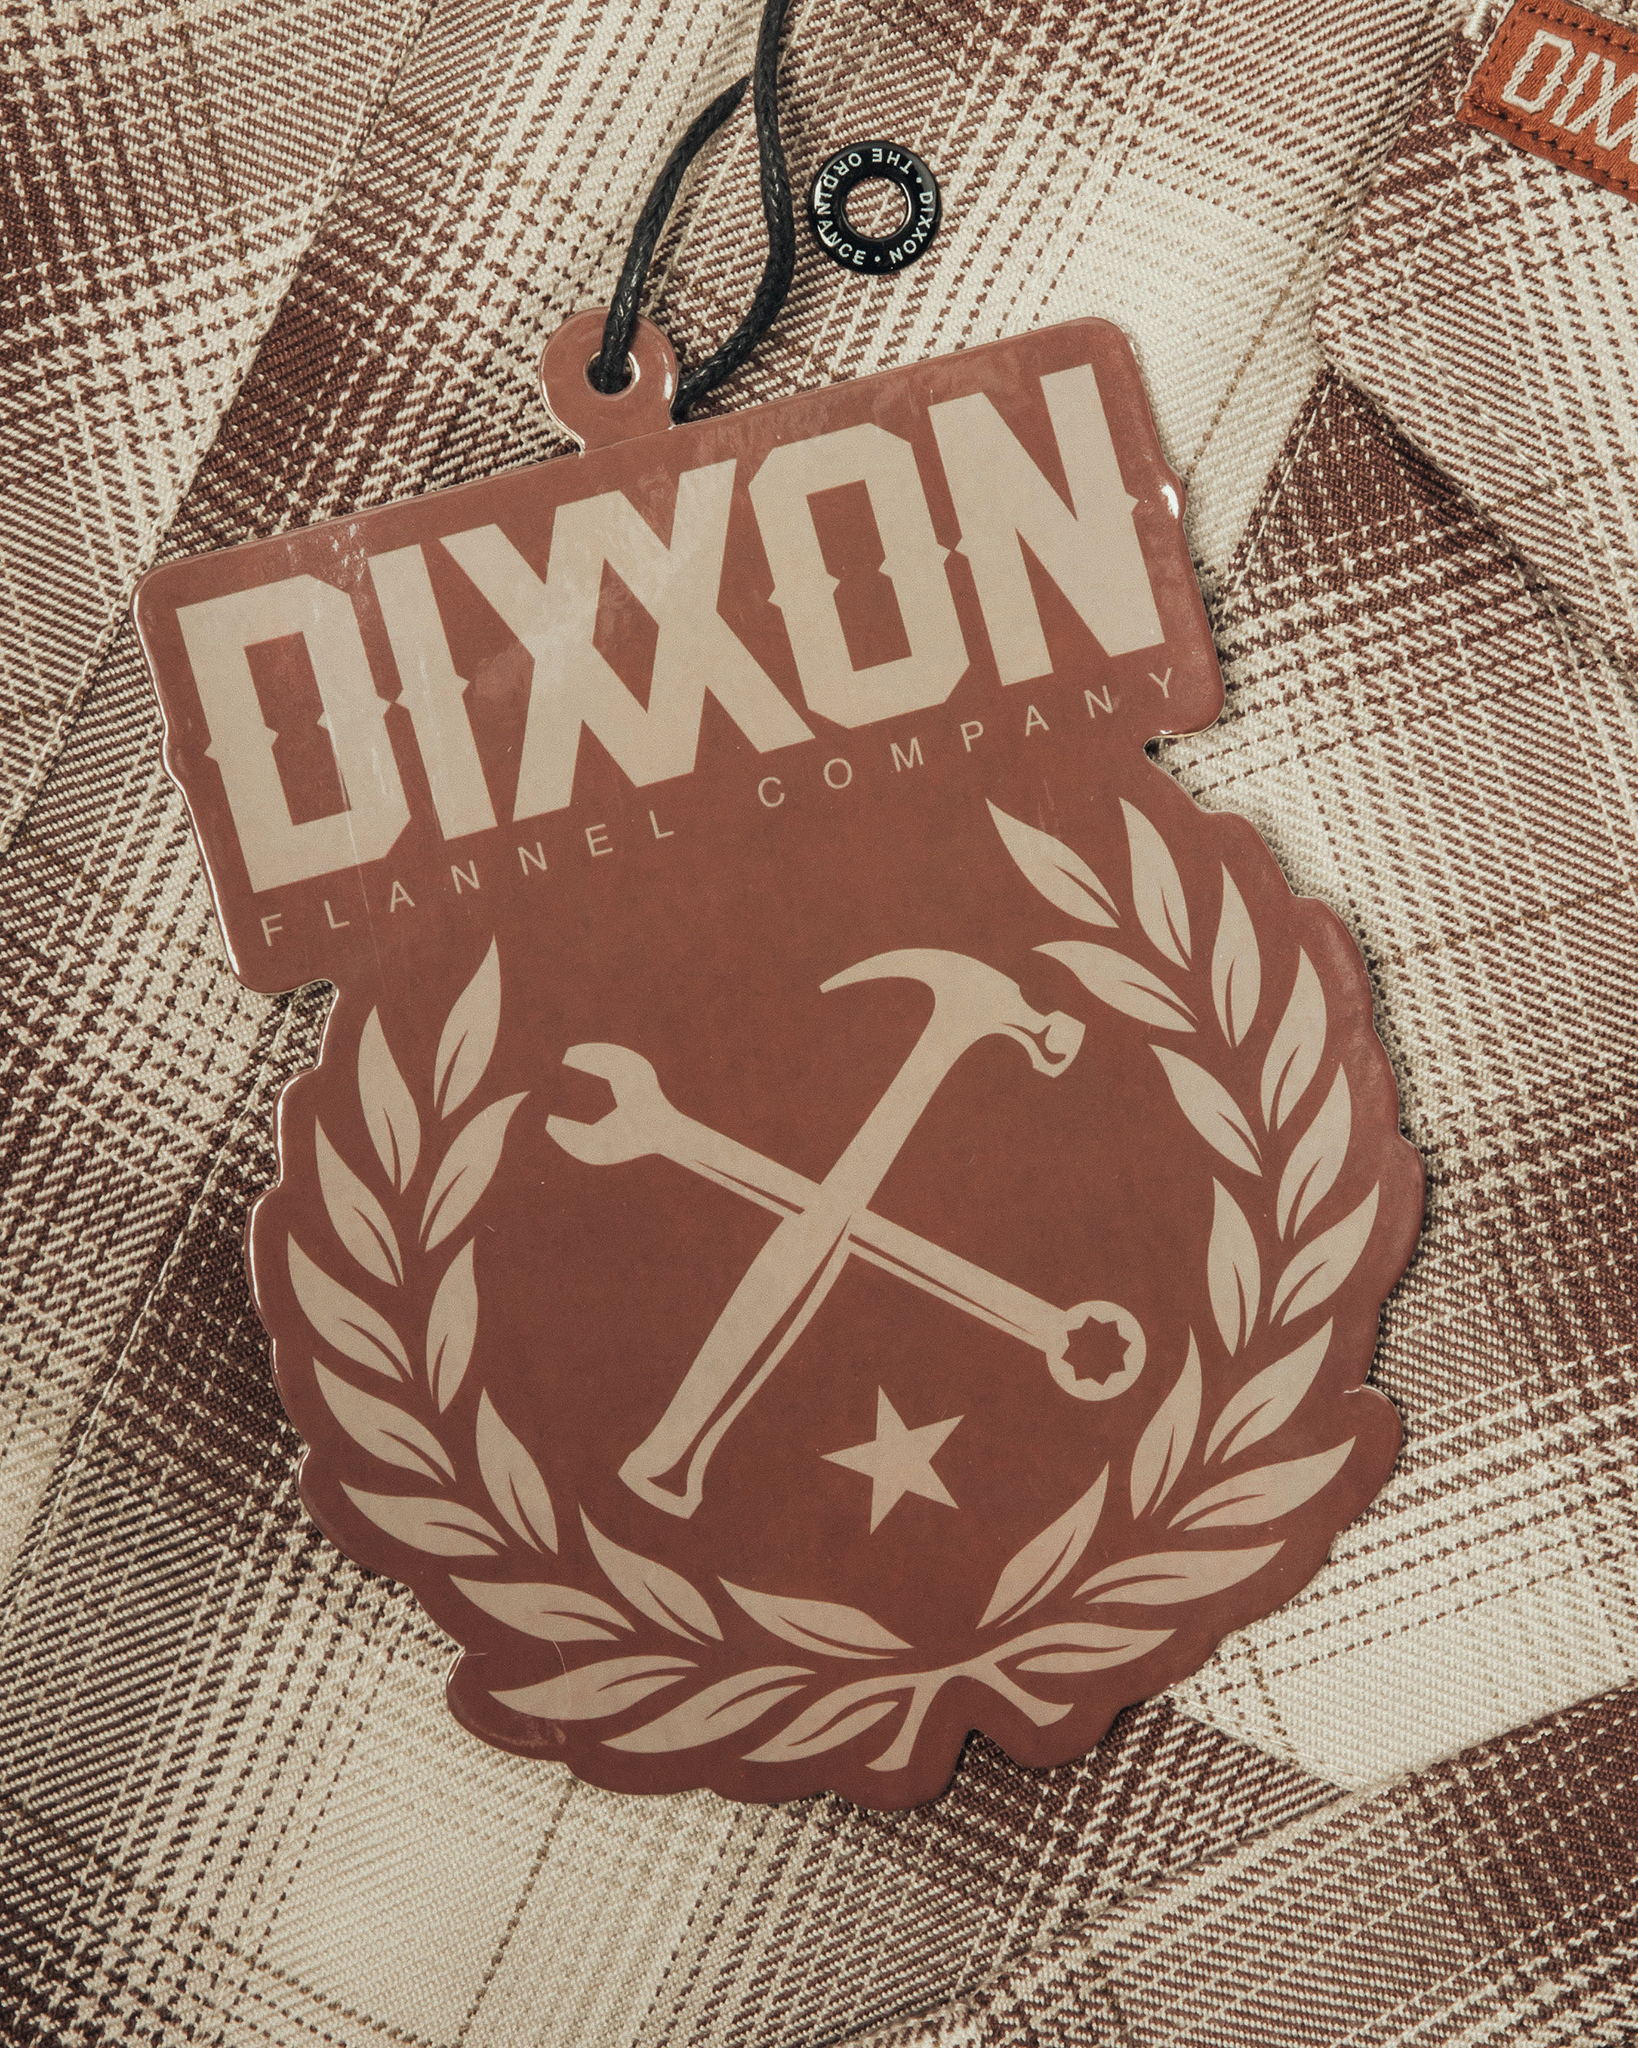 Ordinance Flannel - Dixxon Flannel Co.